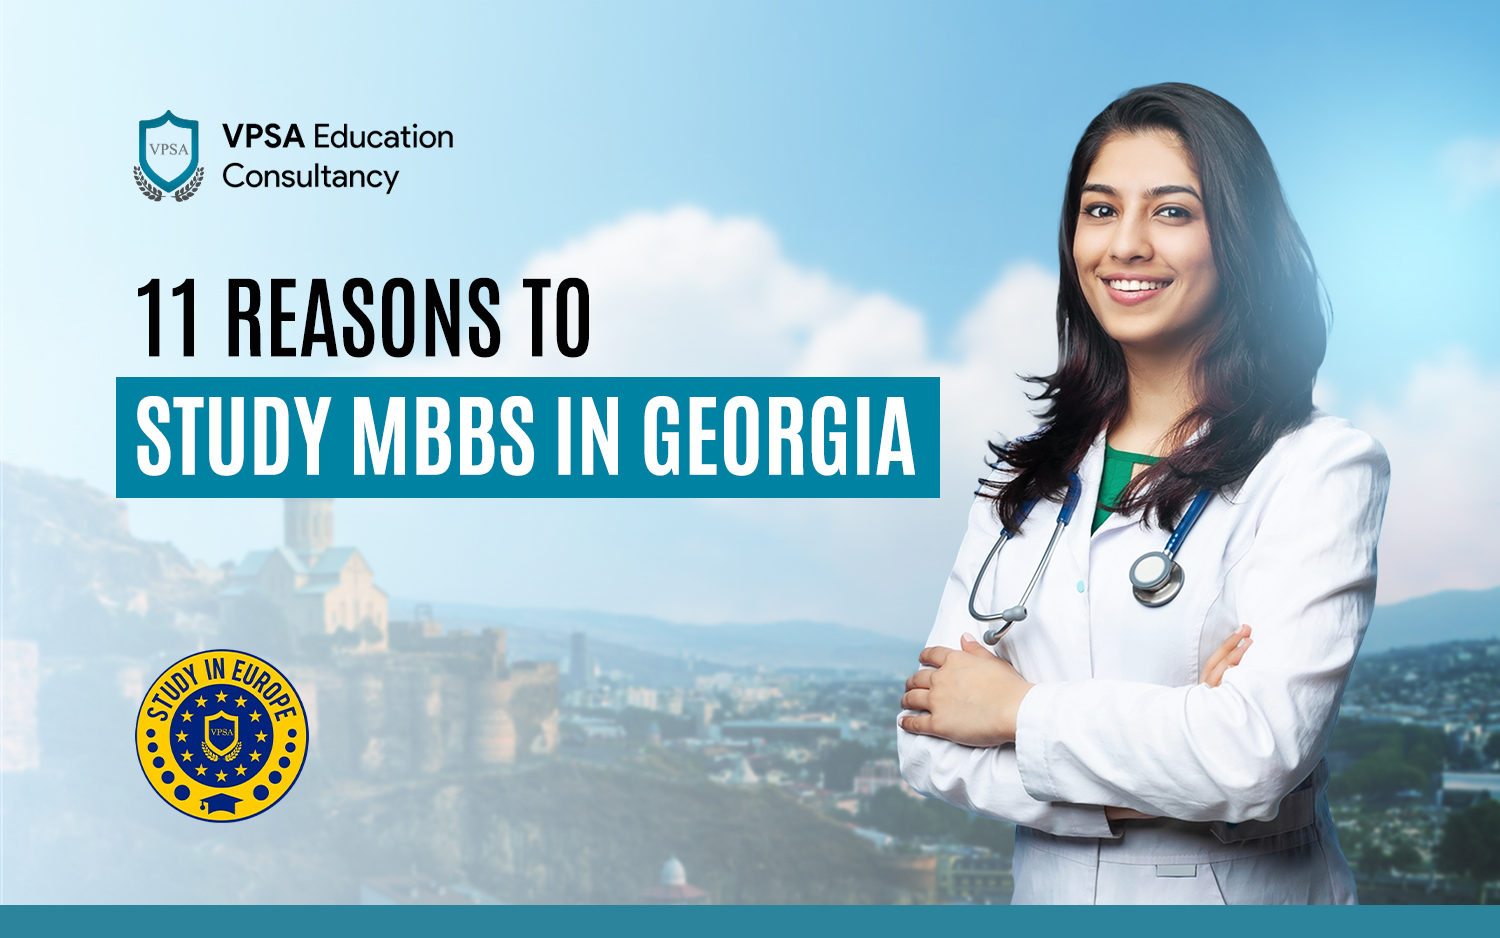 Study mbbs in georgia